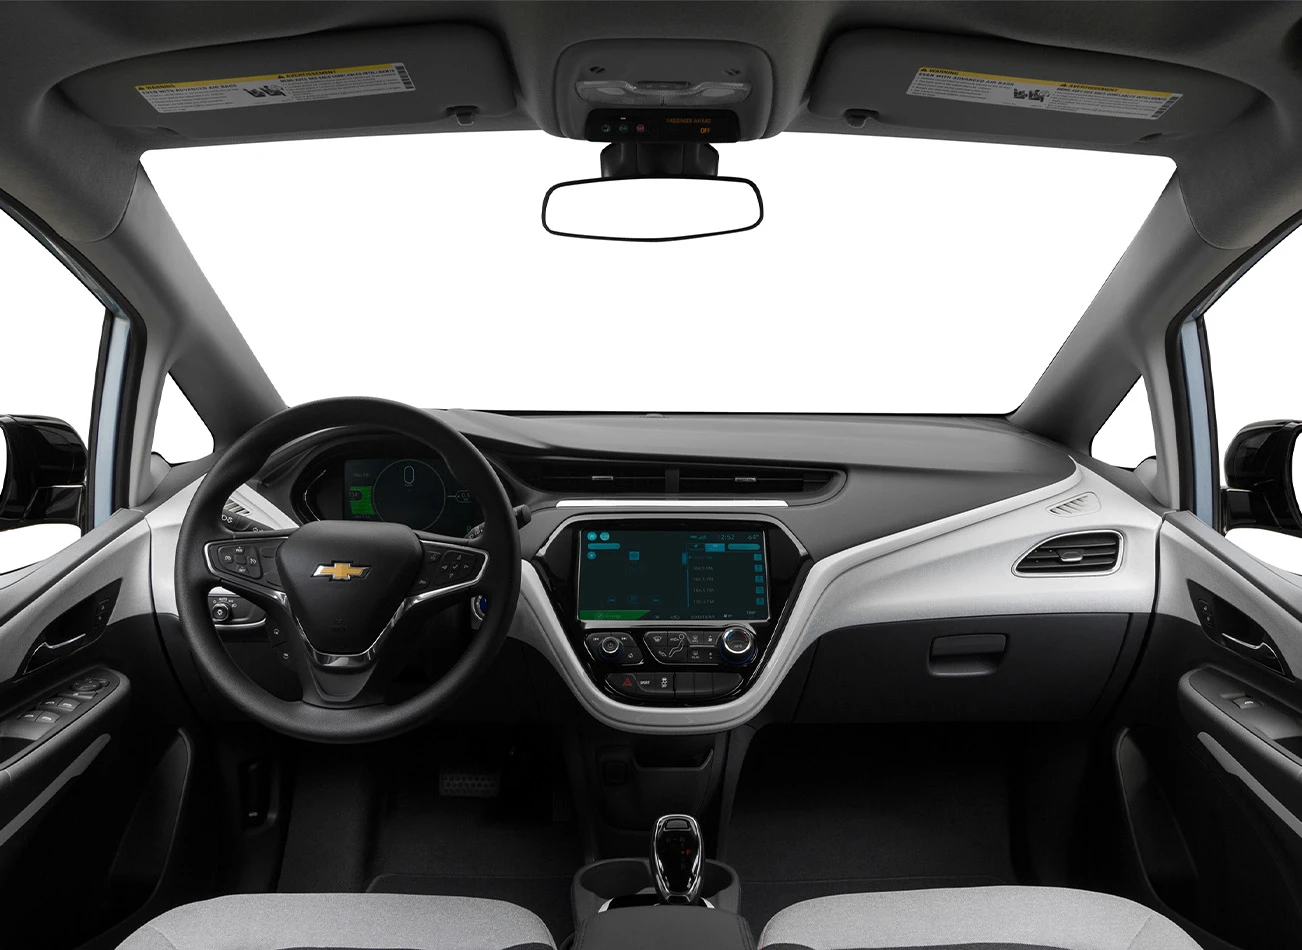 2017 Chevrolet Bolt EV Review: Dashboard and entertainment screen | CarMax